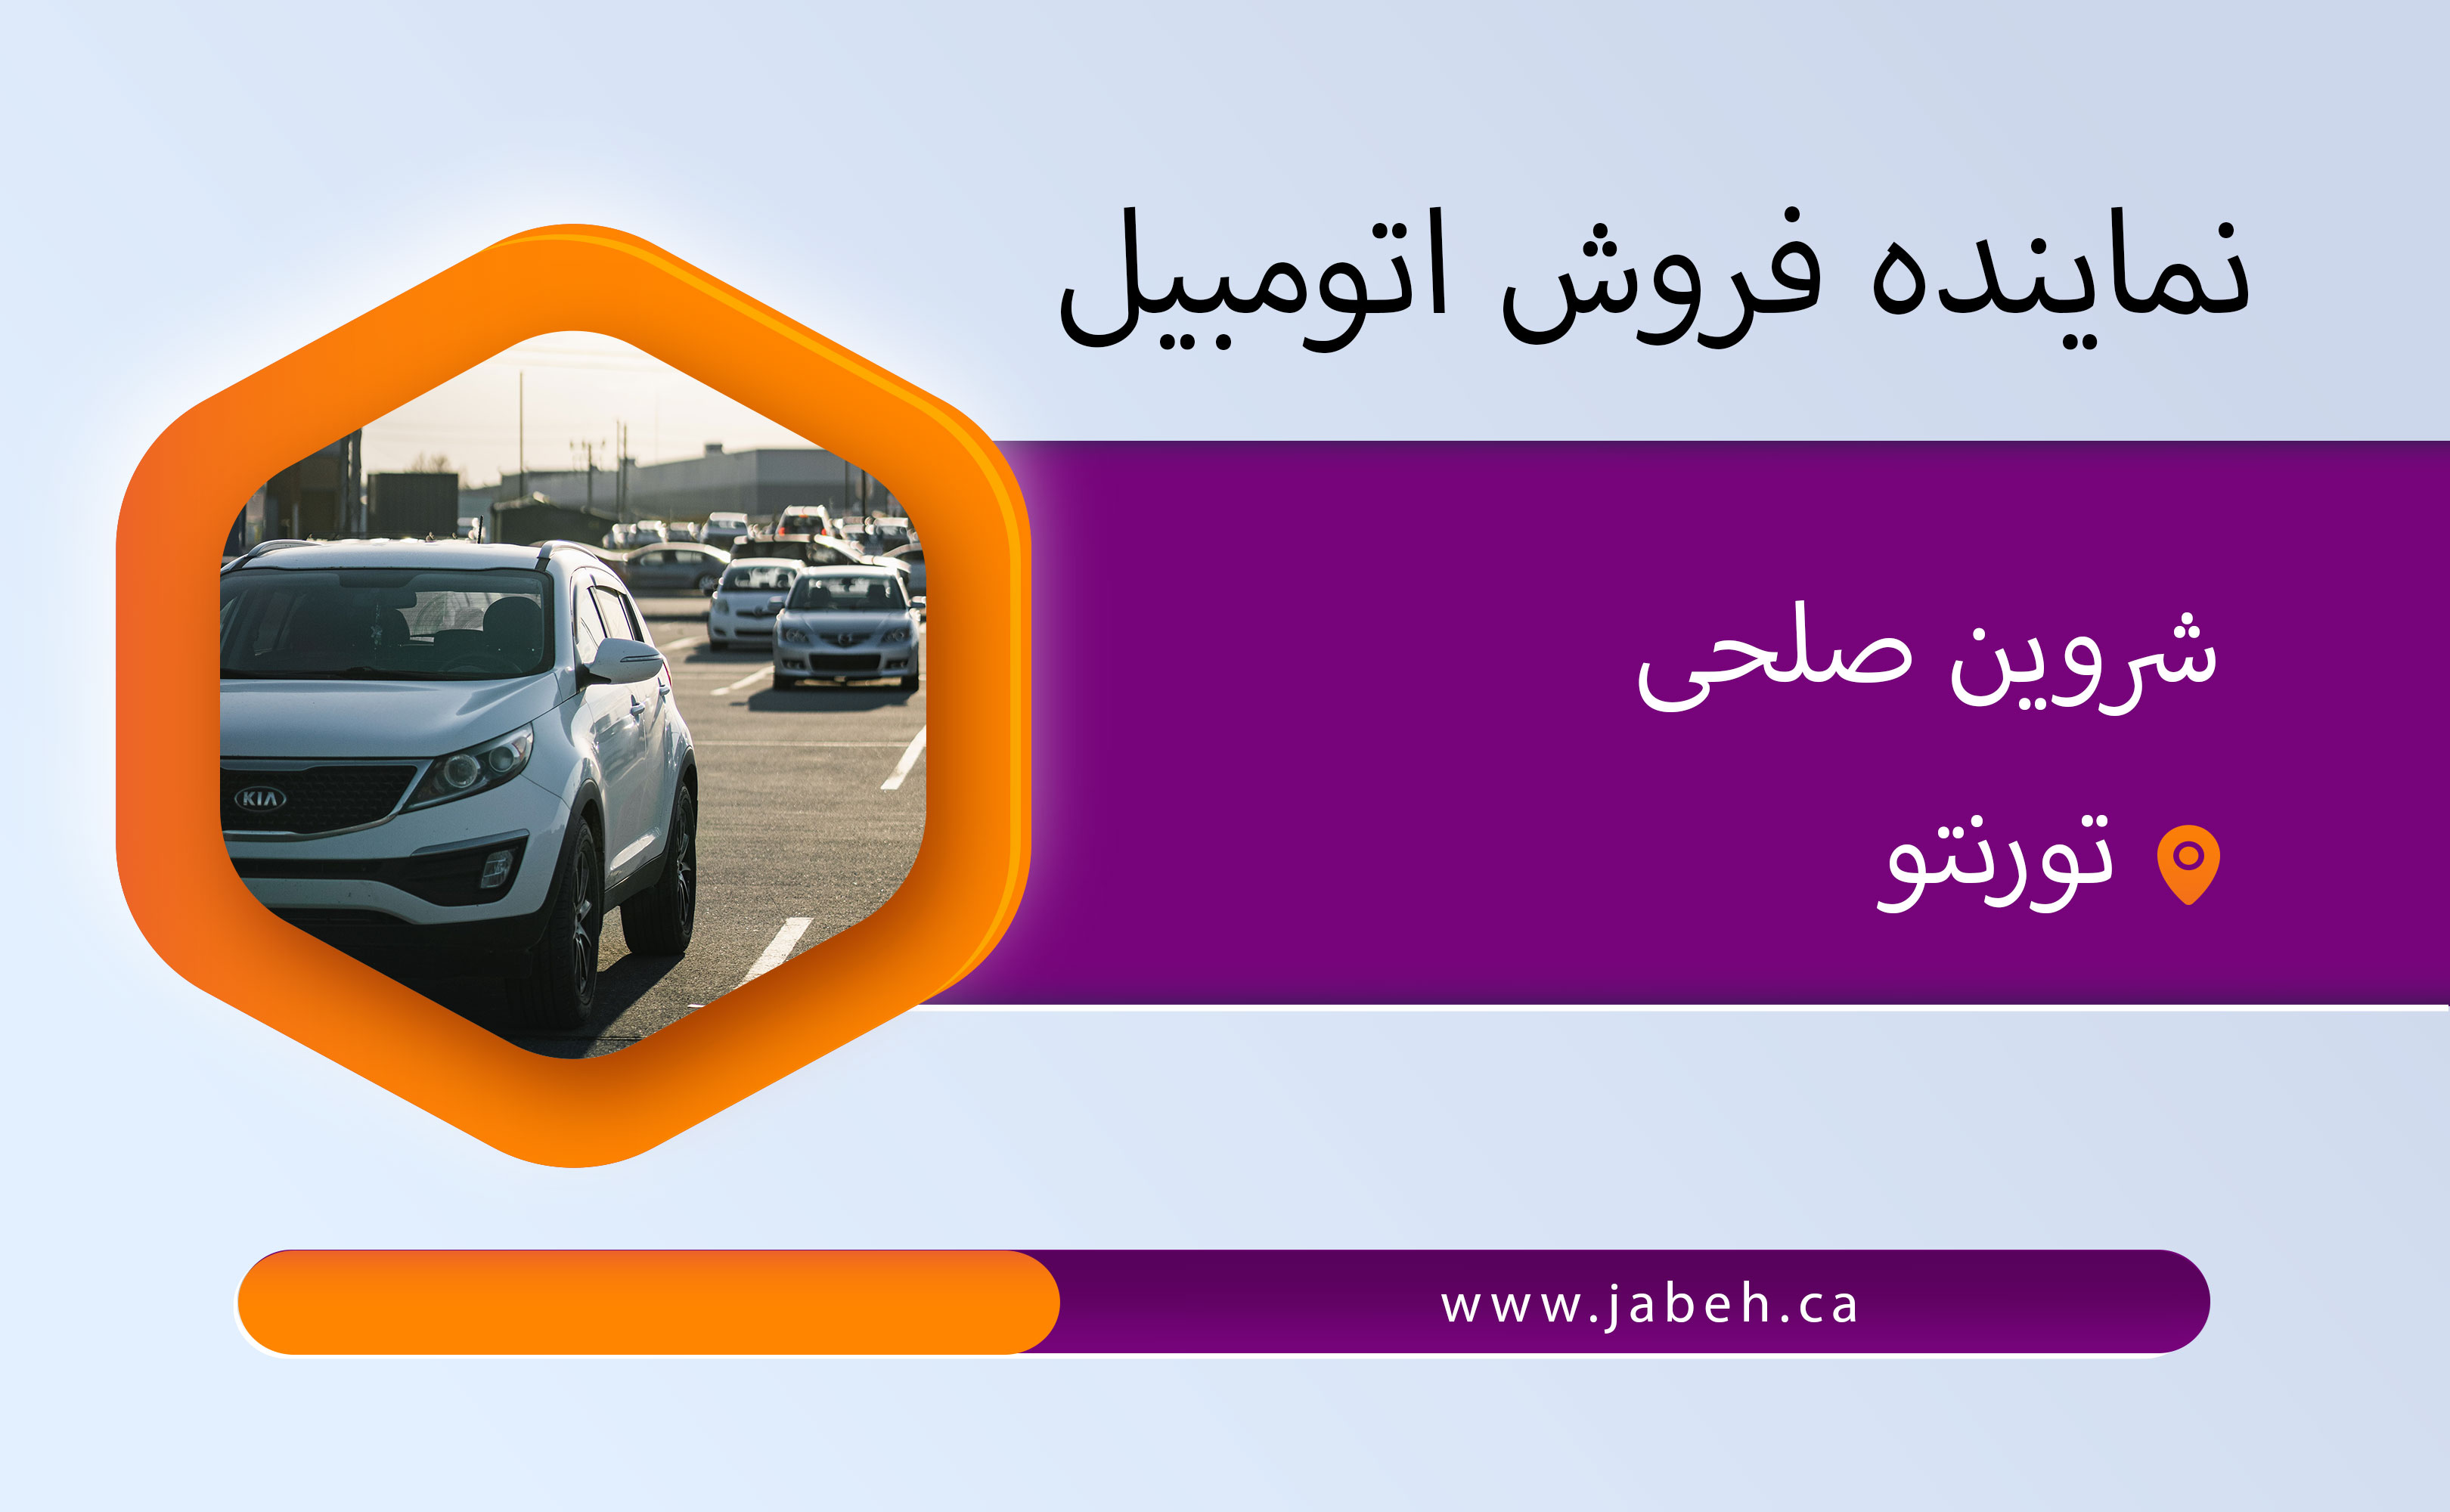 Iranian sales representative of Shervin Sehlhi cars in Toronto